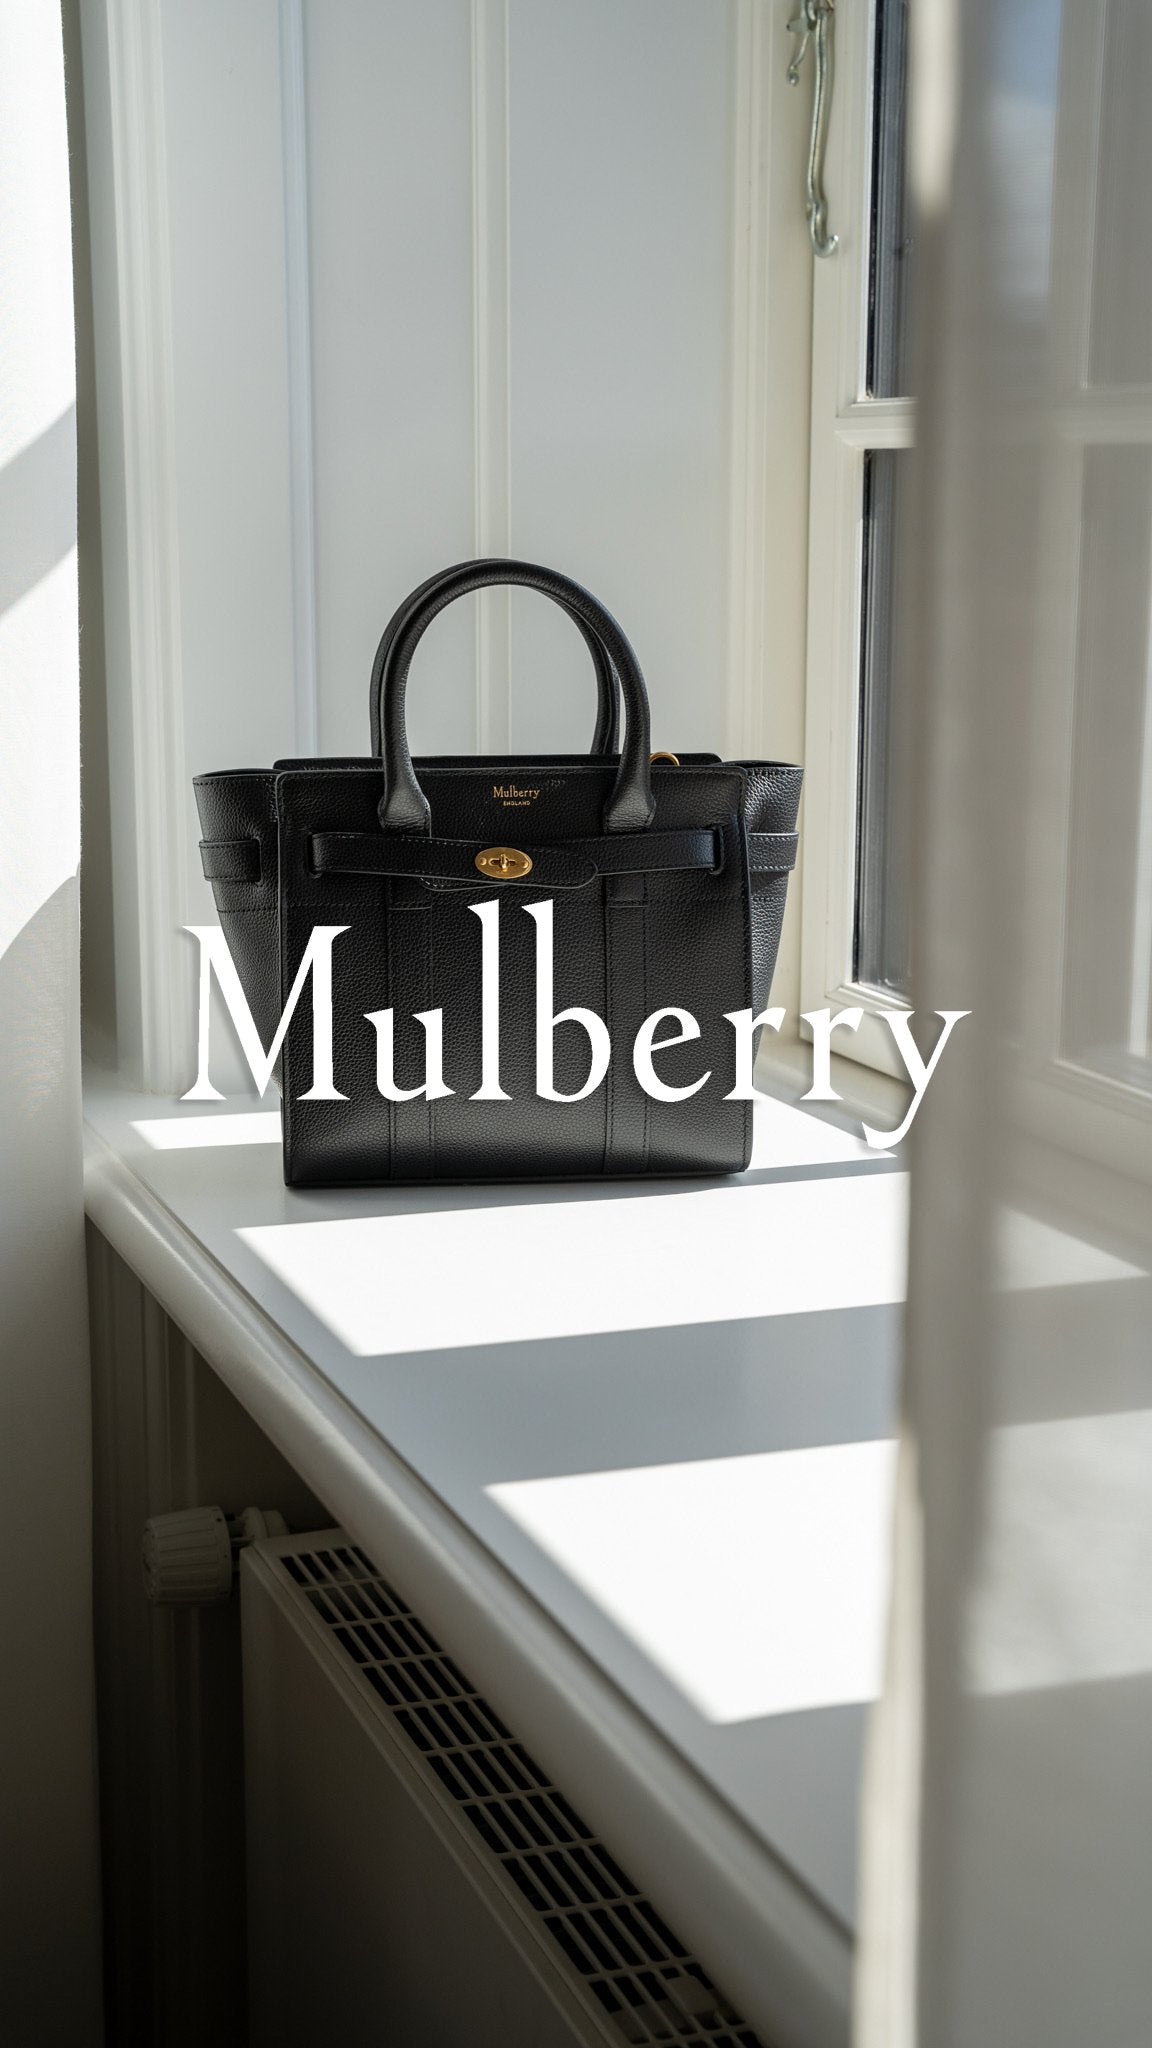 Mulberry | Tasker & → Butler Loftet